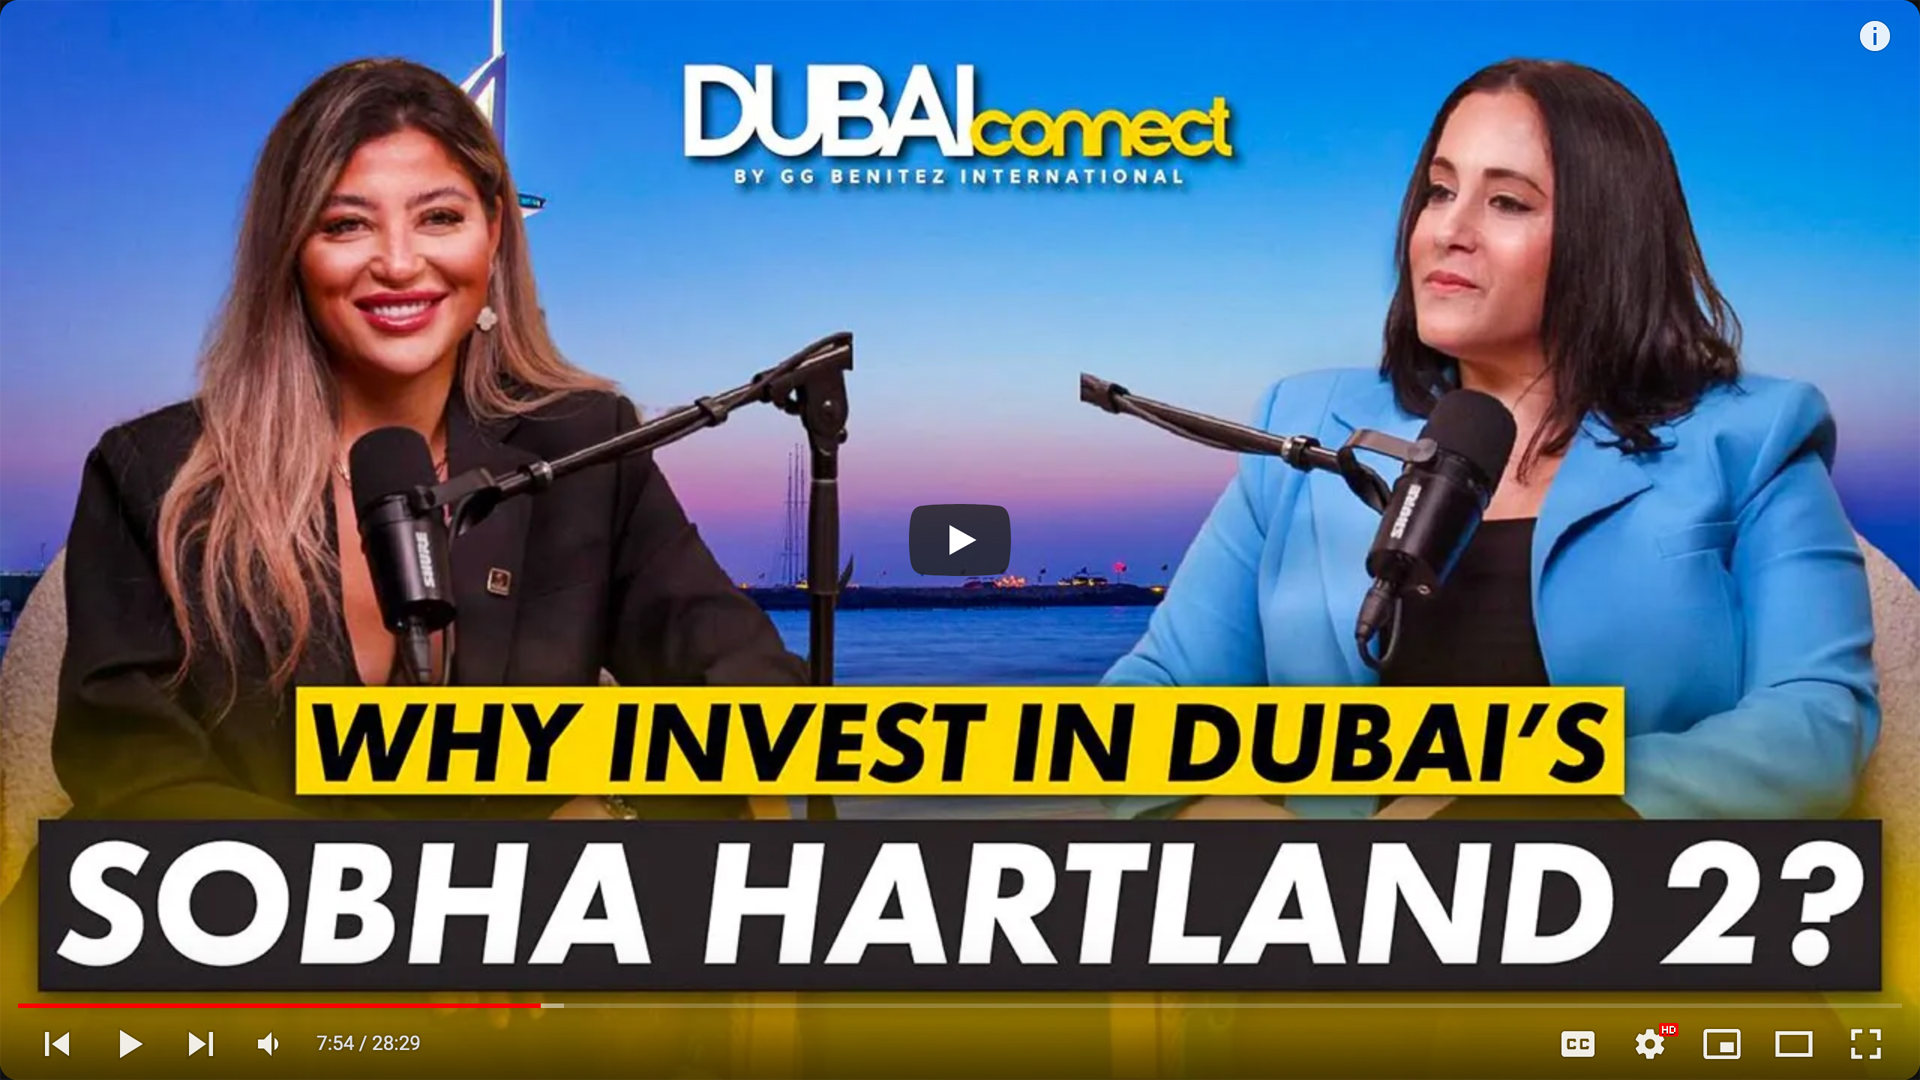 The Dubai Connect: Exclusive Interview w/Top Tier Developer SOBHA Highlighting a Top Dubai Real Estate Investment- SOBHA Hartland II